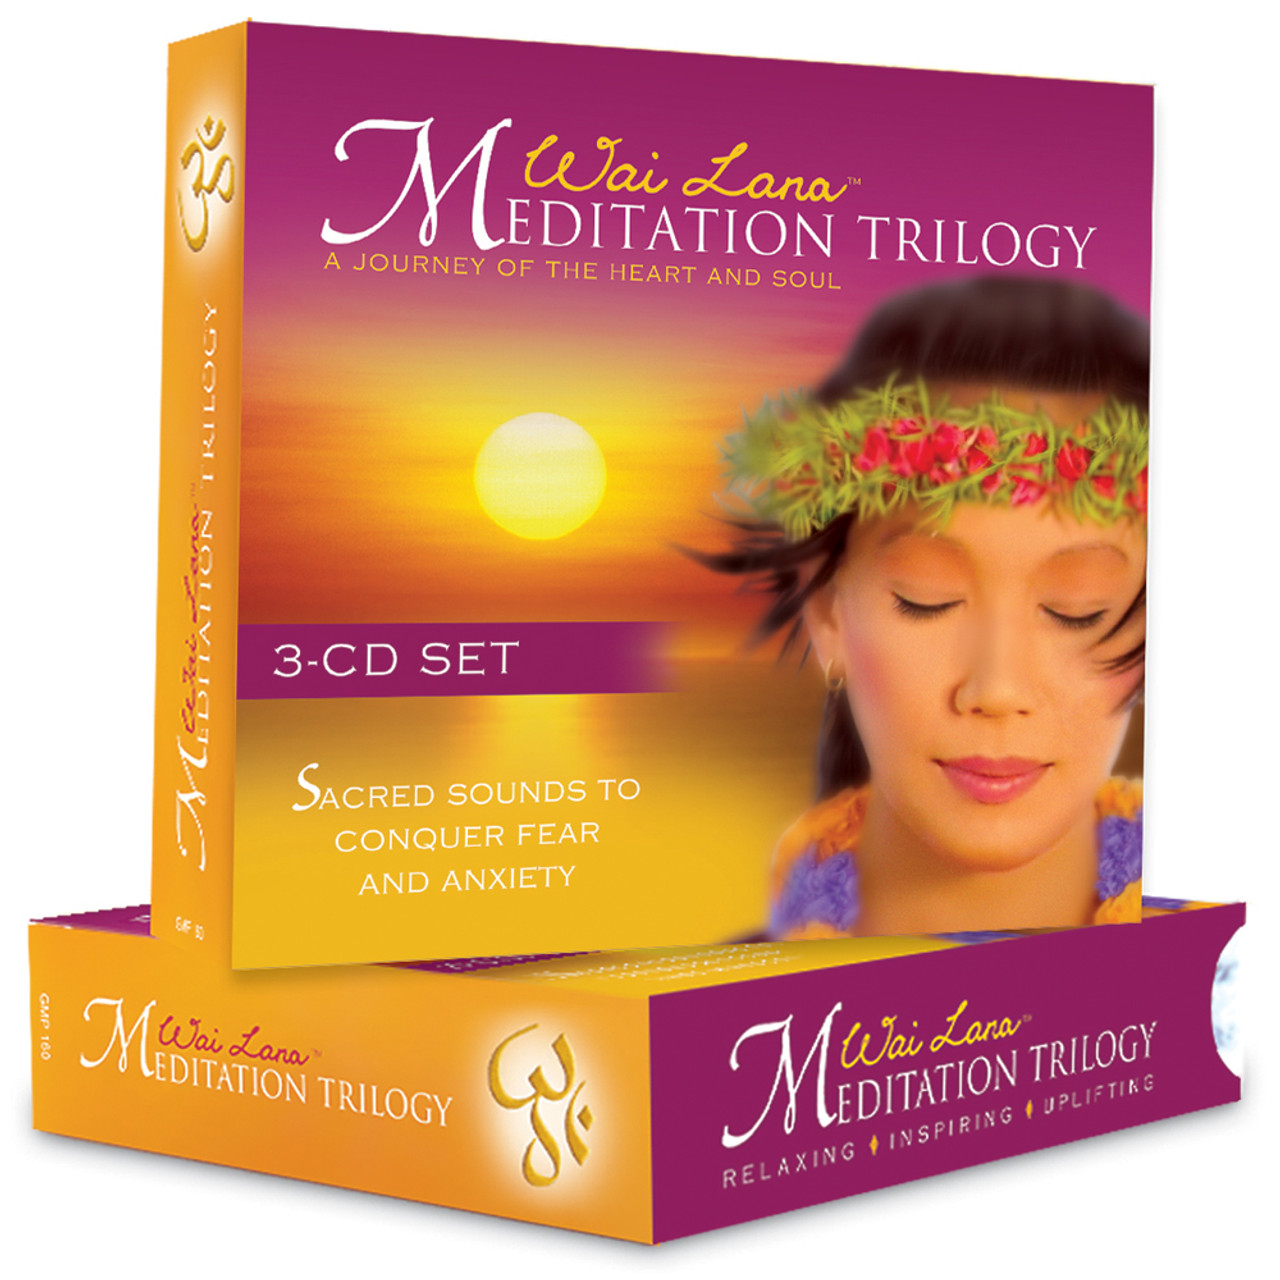 meditation trilogy